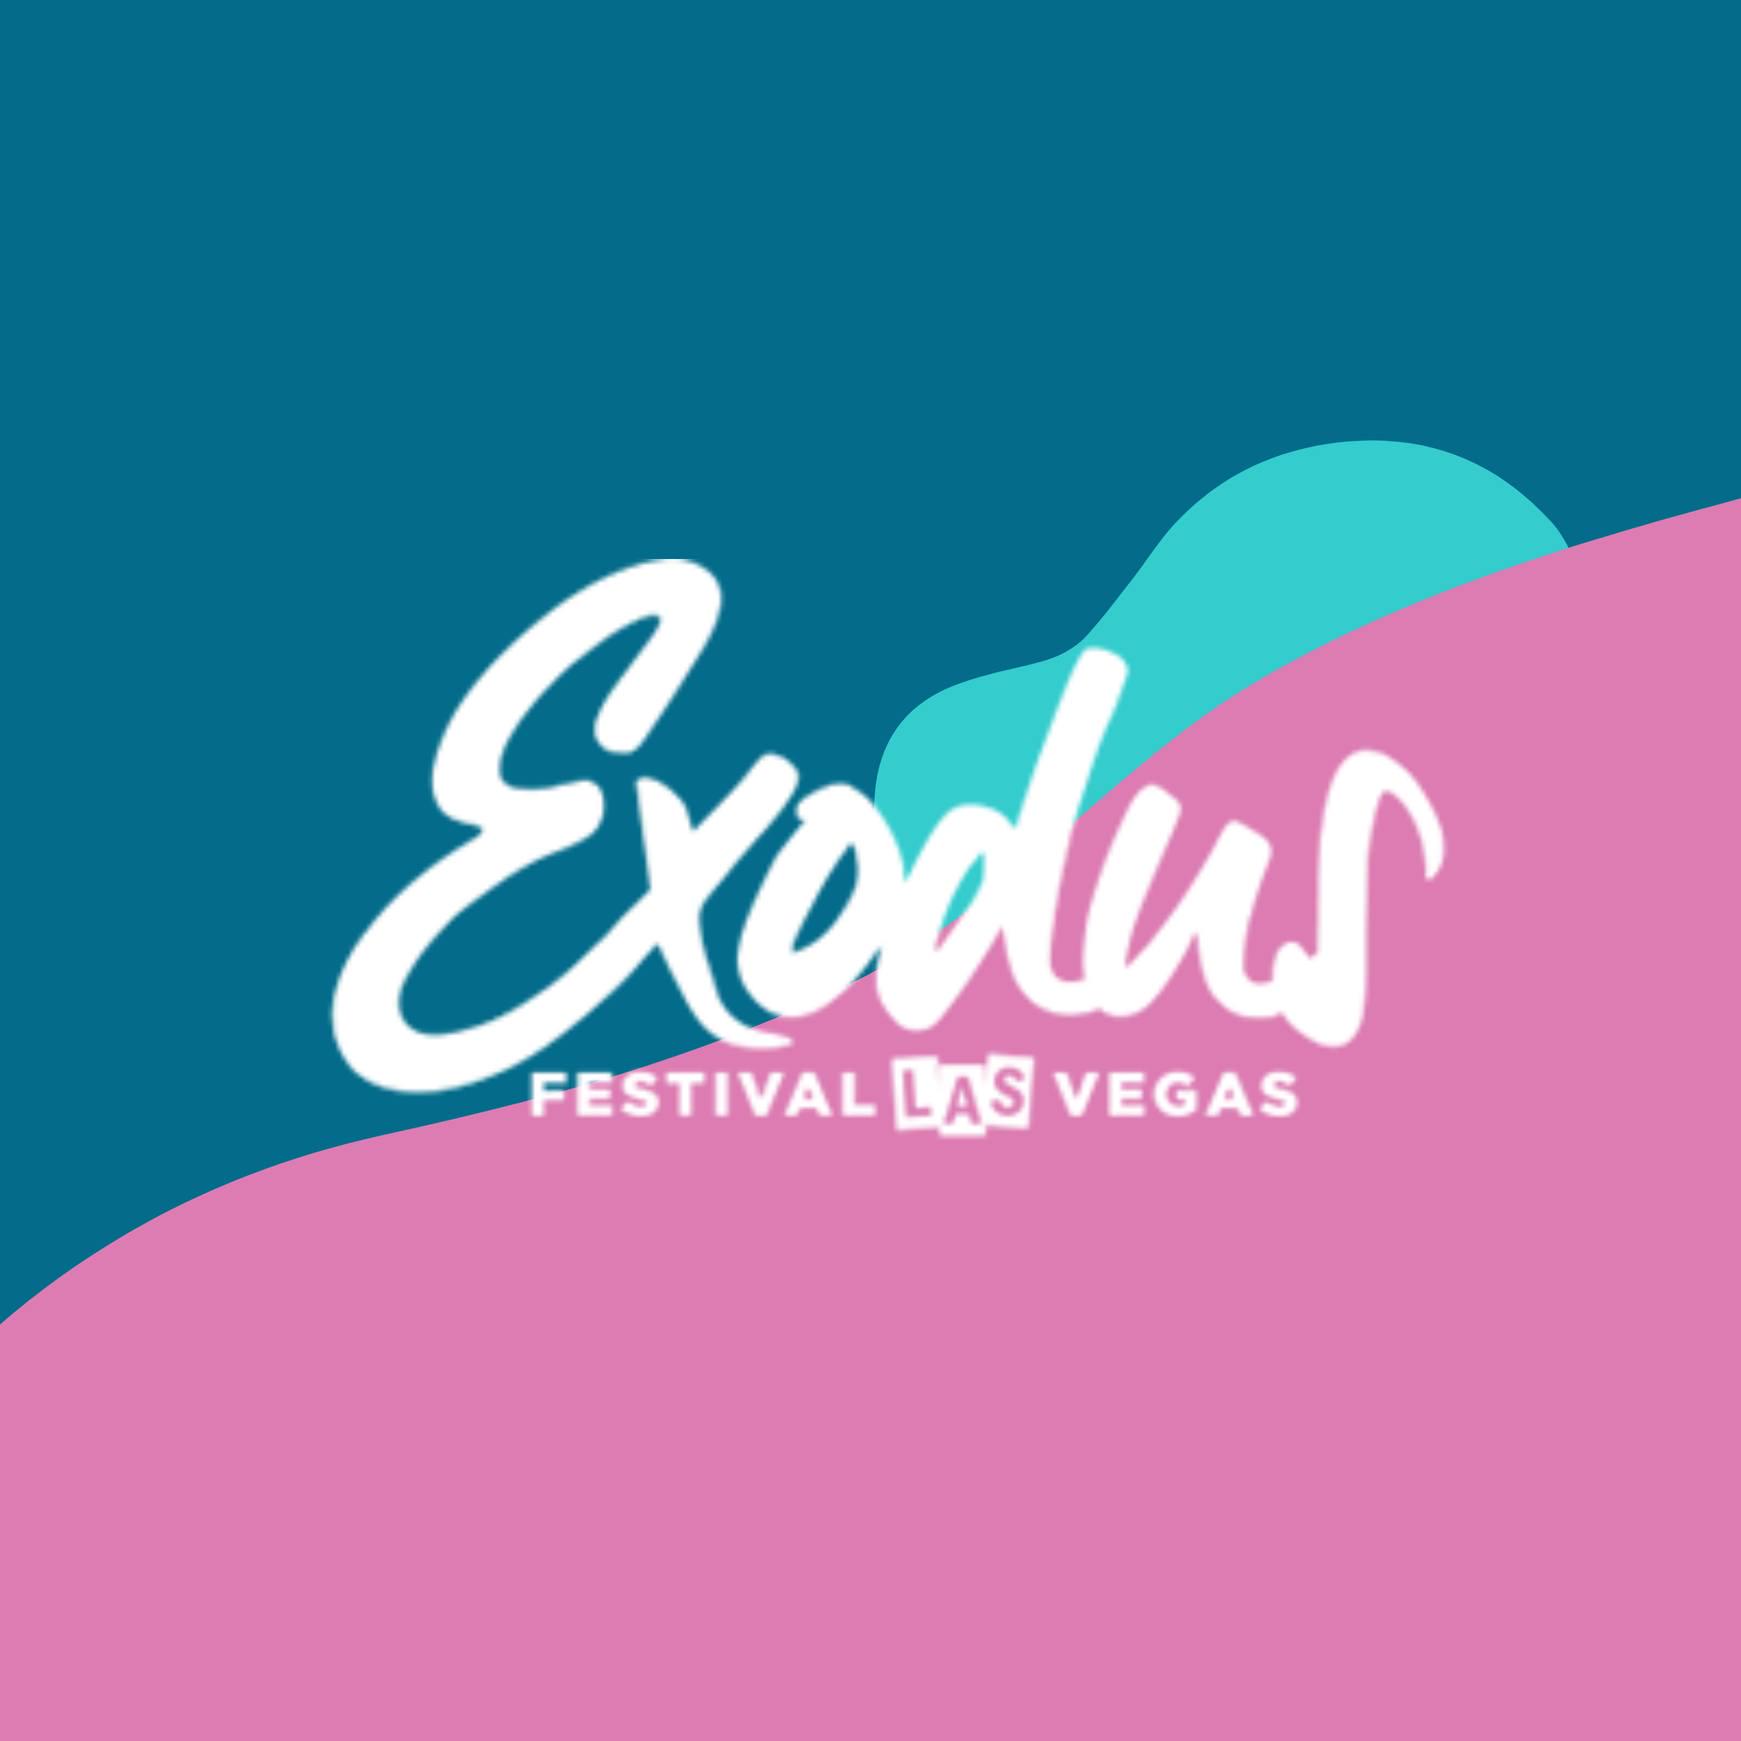 Exodus Festival Las Vegas - Labor Day Long Weekend